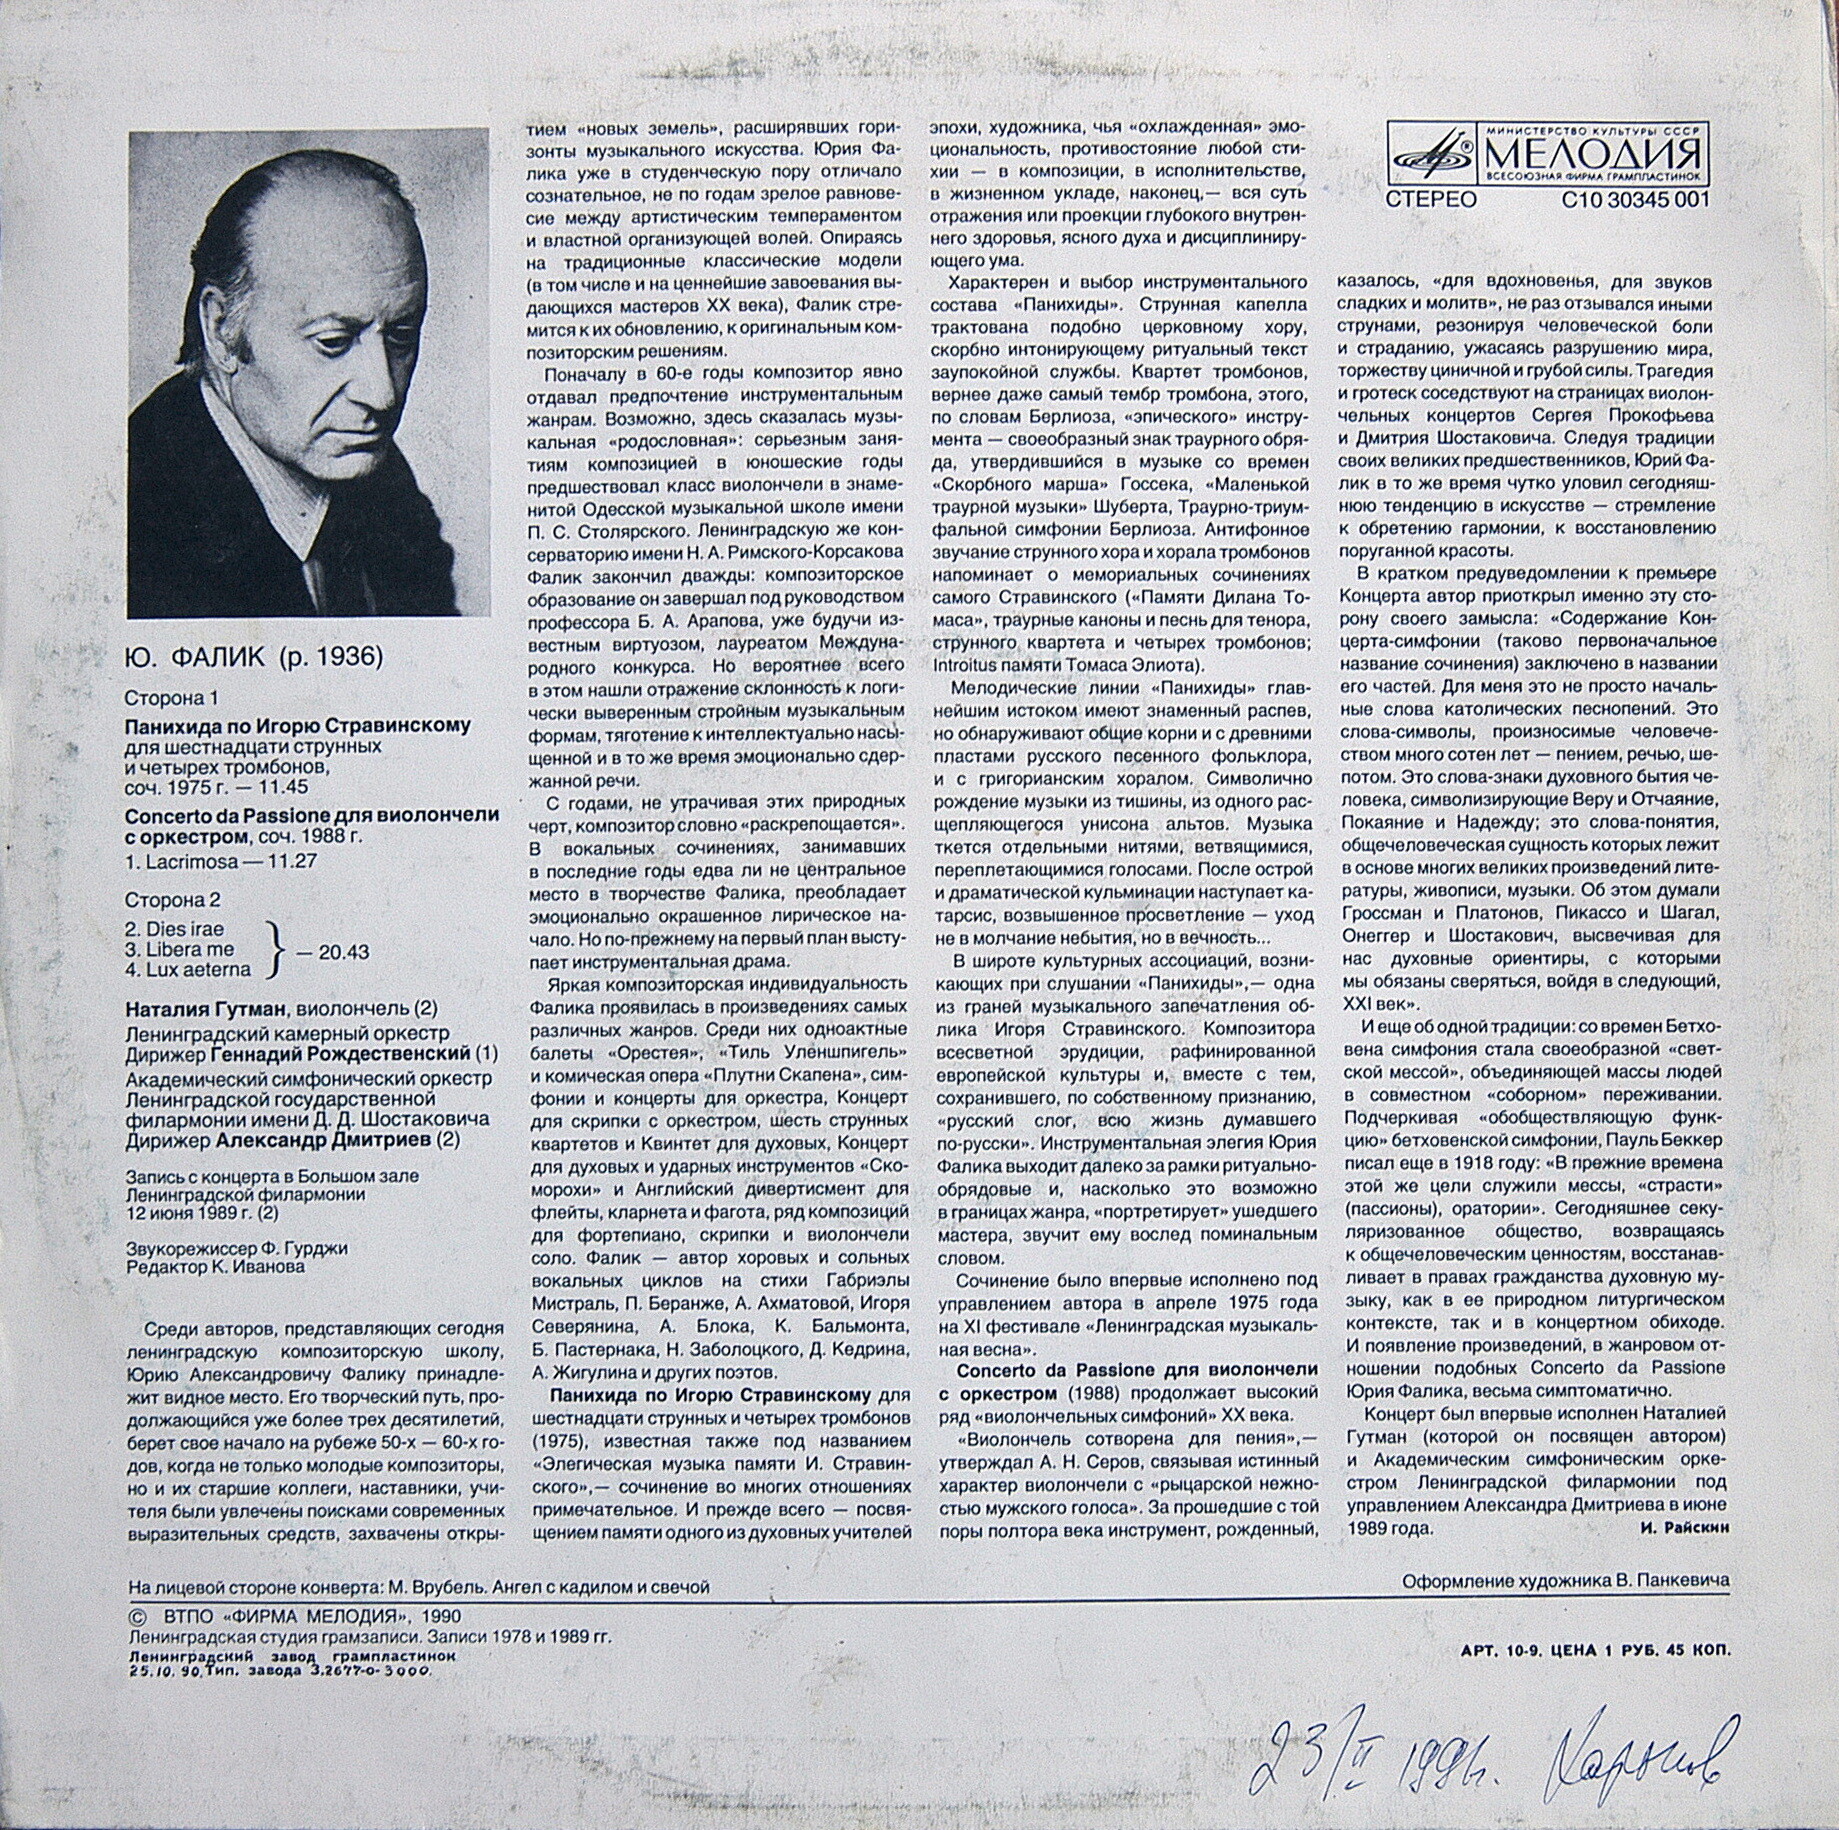 Ю. ФАЛИК (1936)